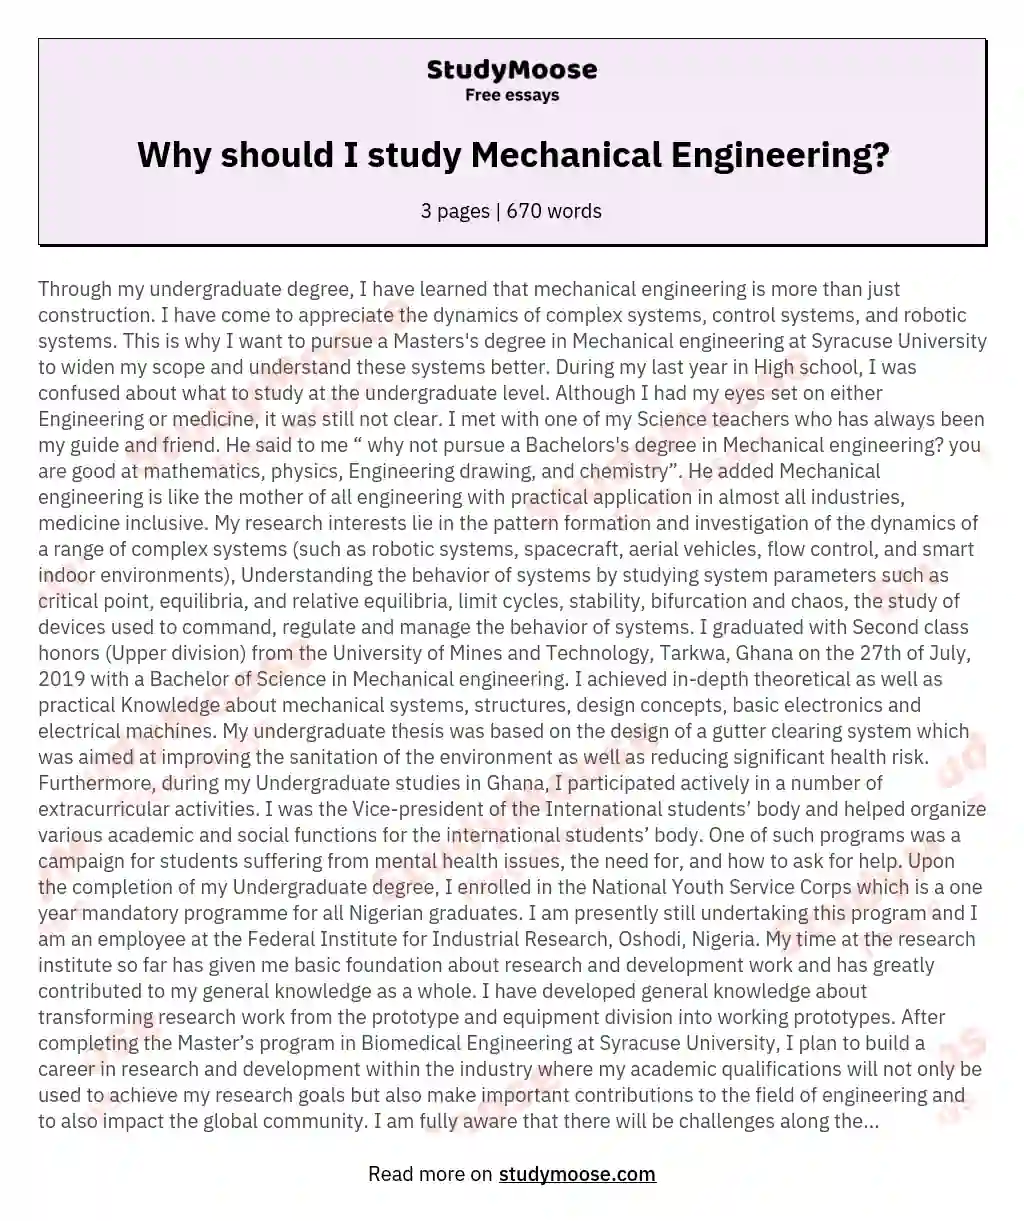 Why should I study Mechanical Engineering? essay